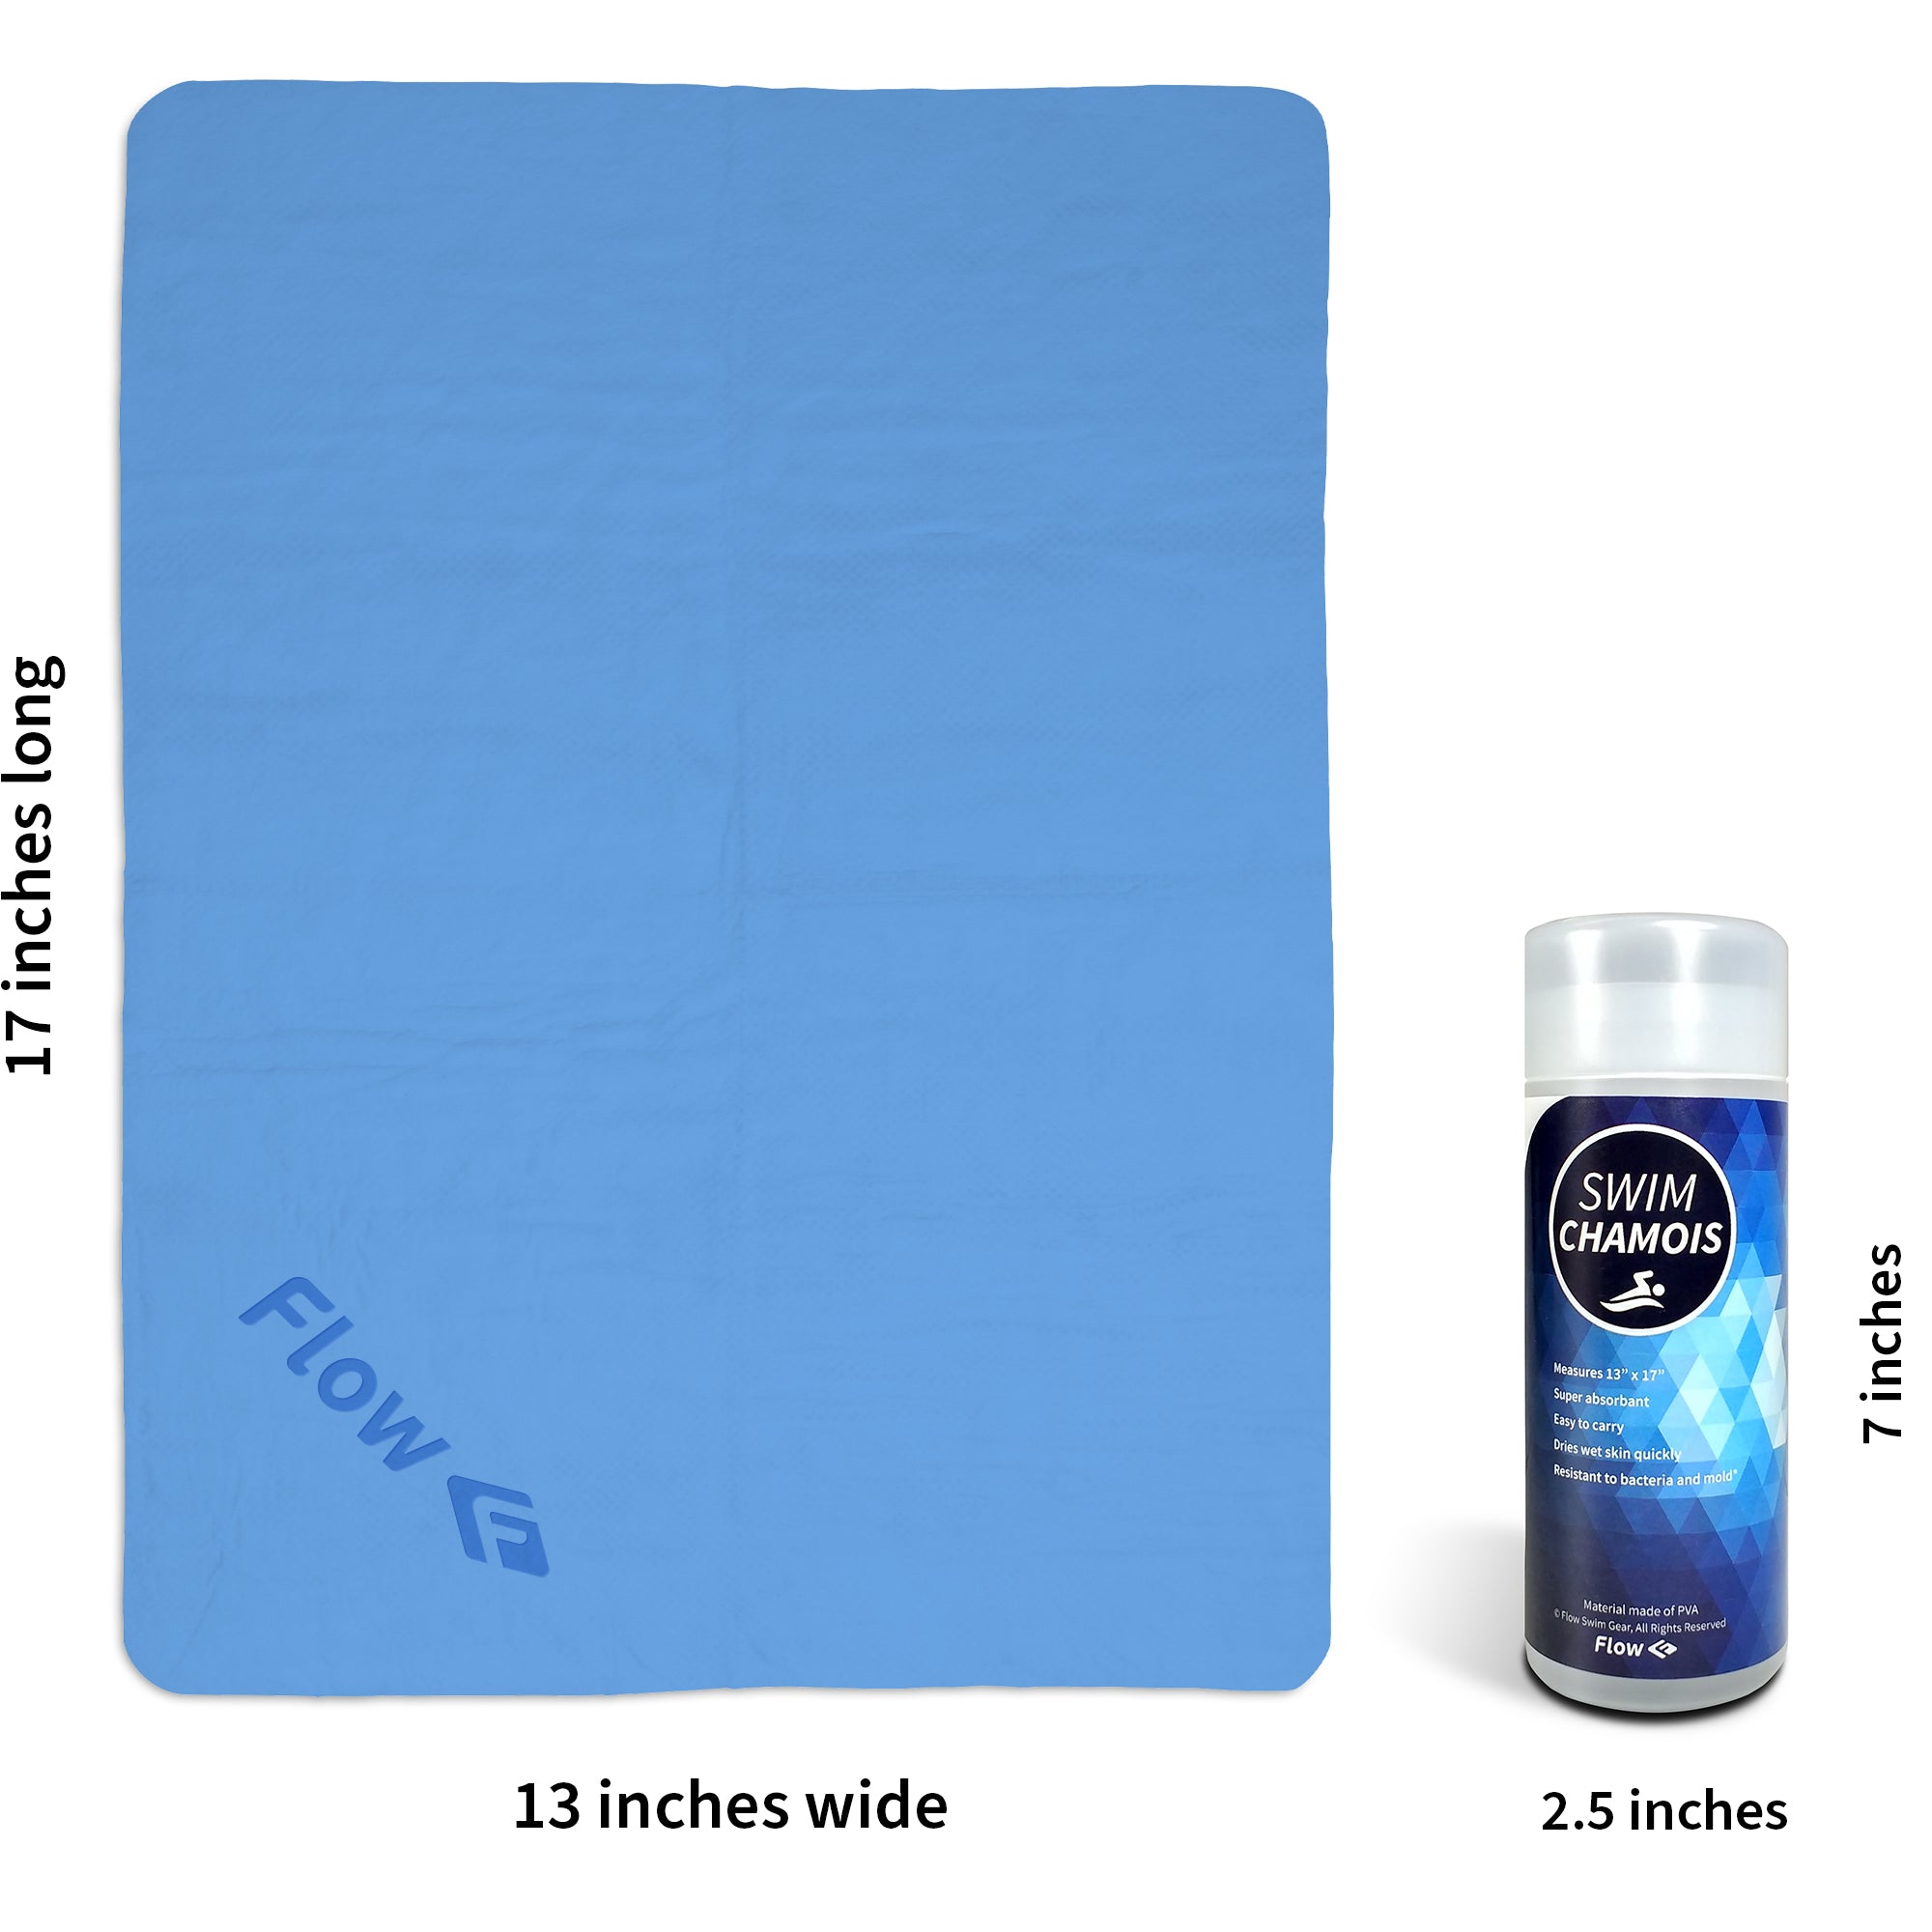 Micromagic Chamois Towel CT5536 60cm x 40cm –